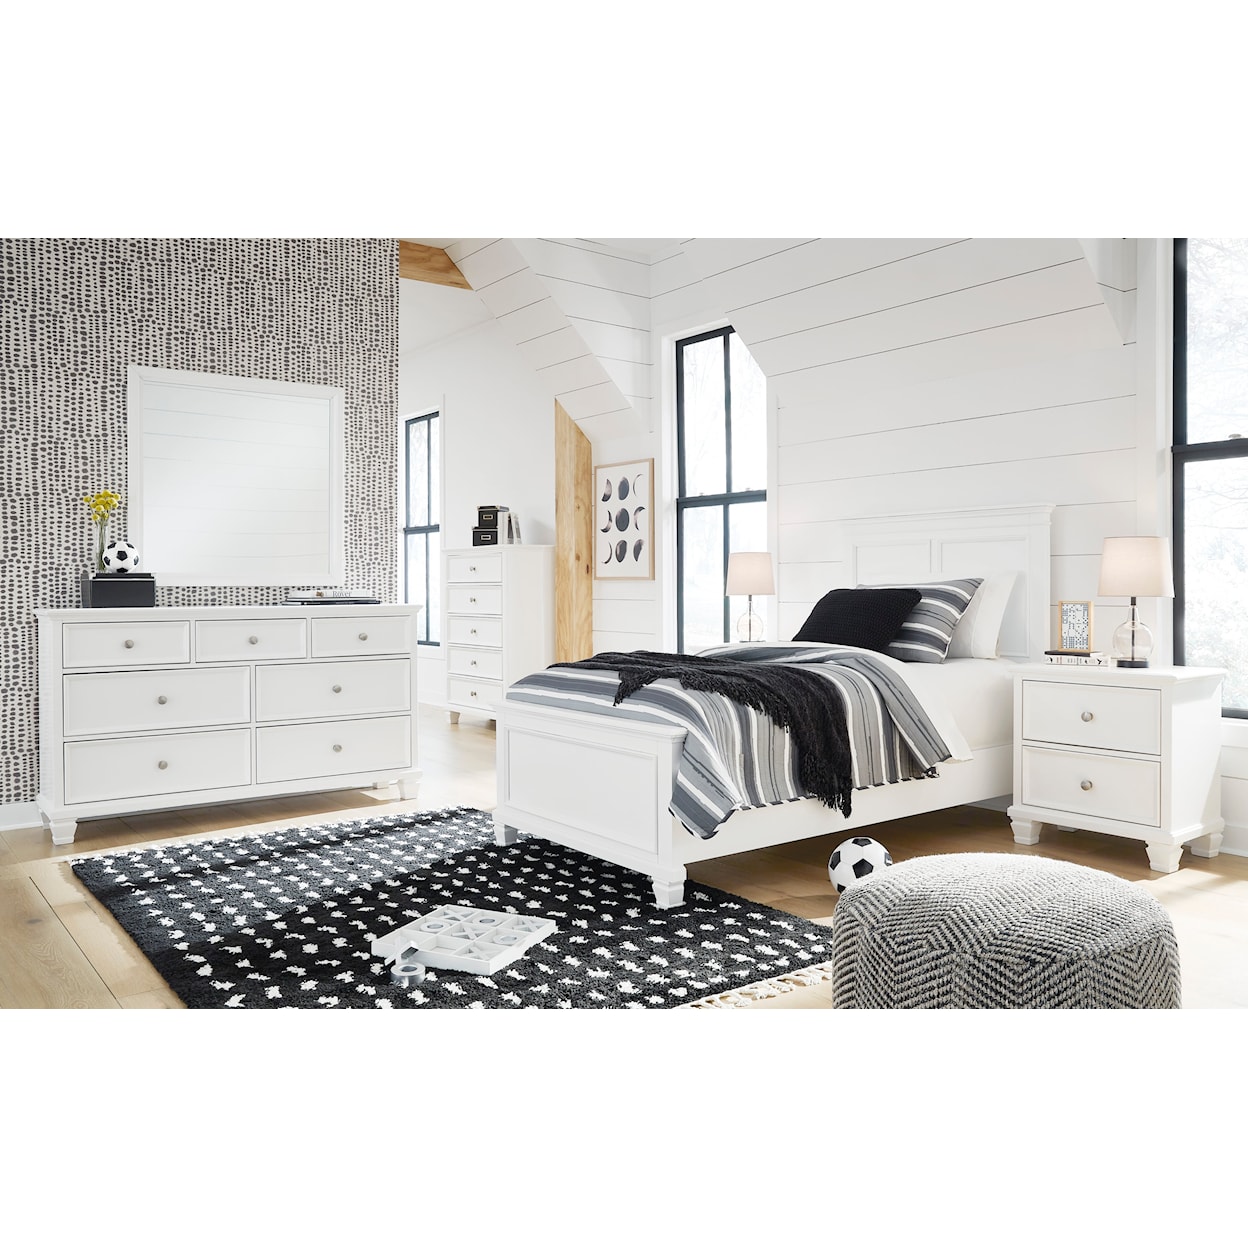 Signature Design by Ashley Furniture Fortman Twin Bedroom Set